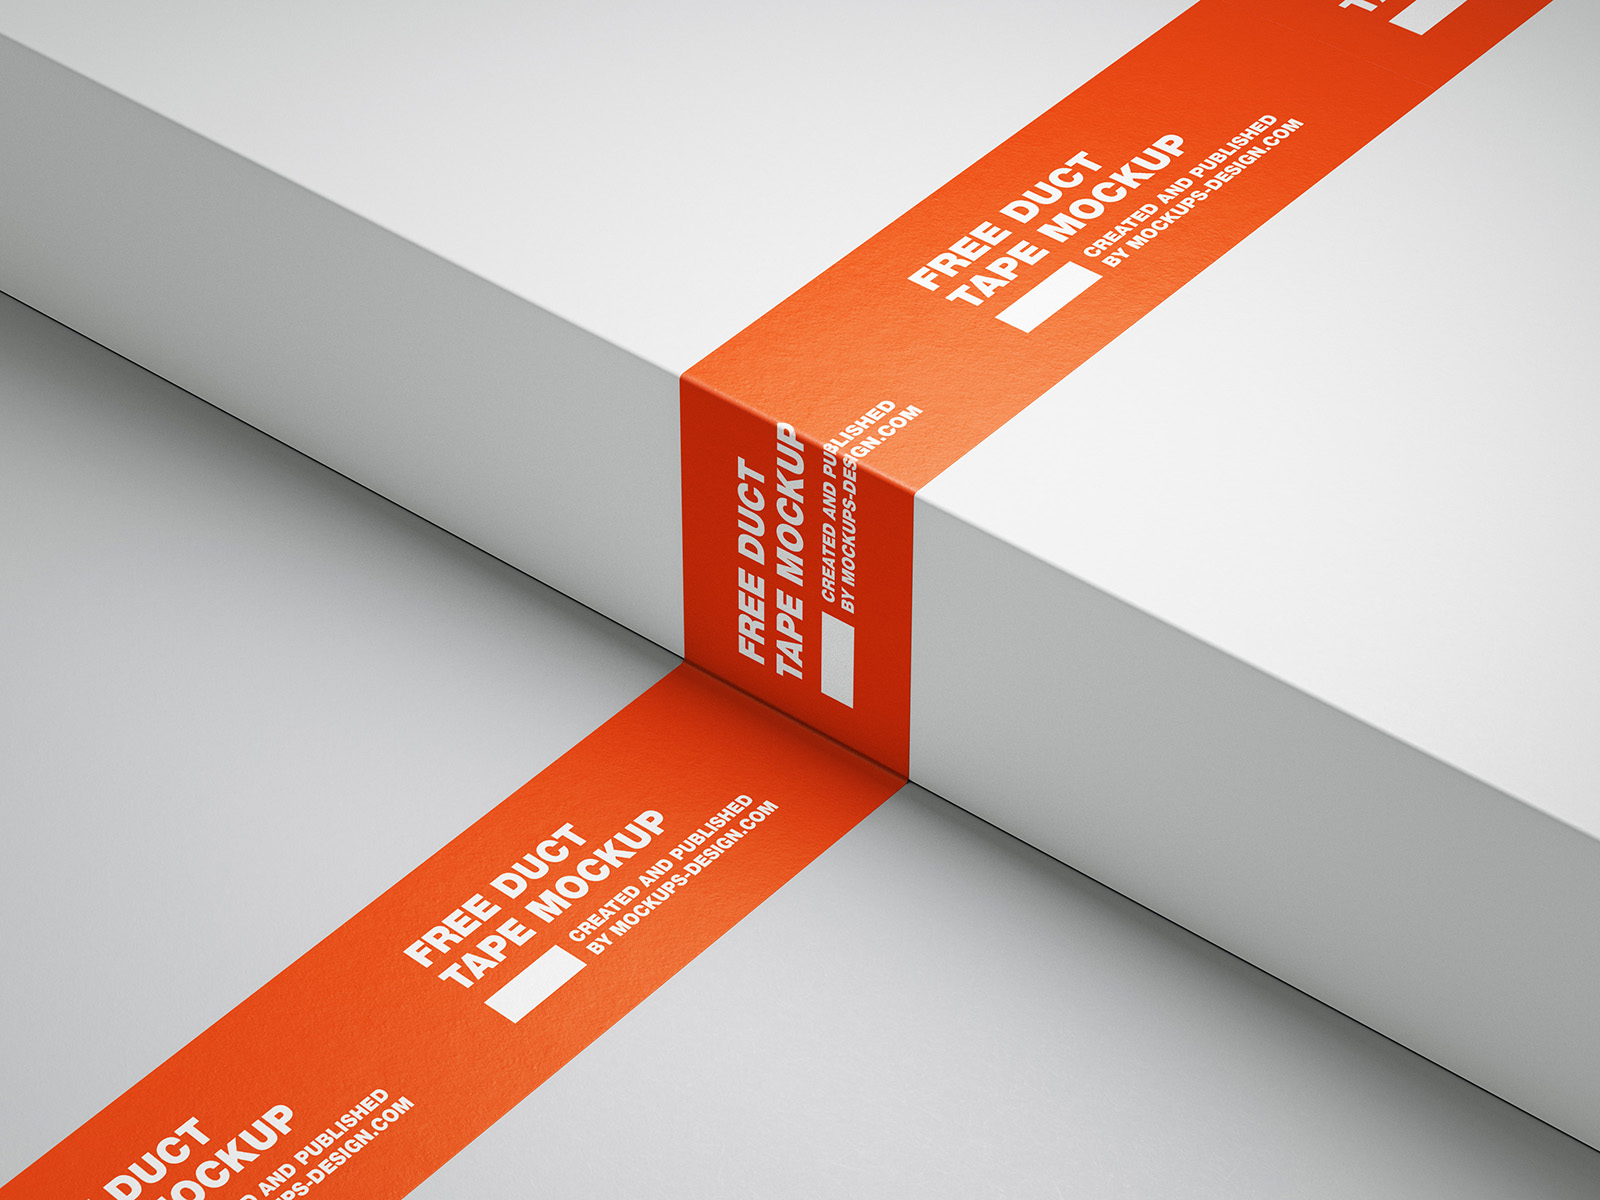 Premium PSD  Patterned duct tape mockup psd, editable design